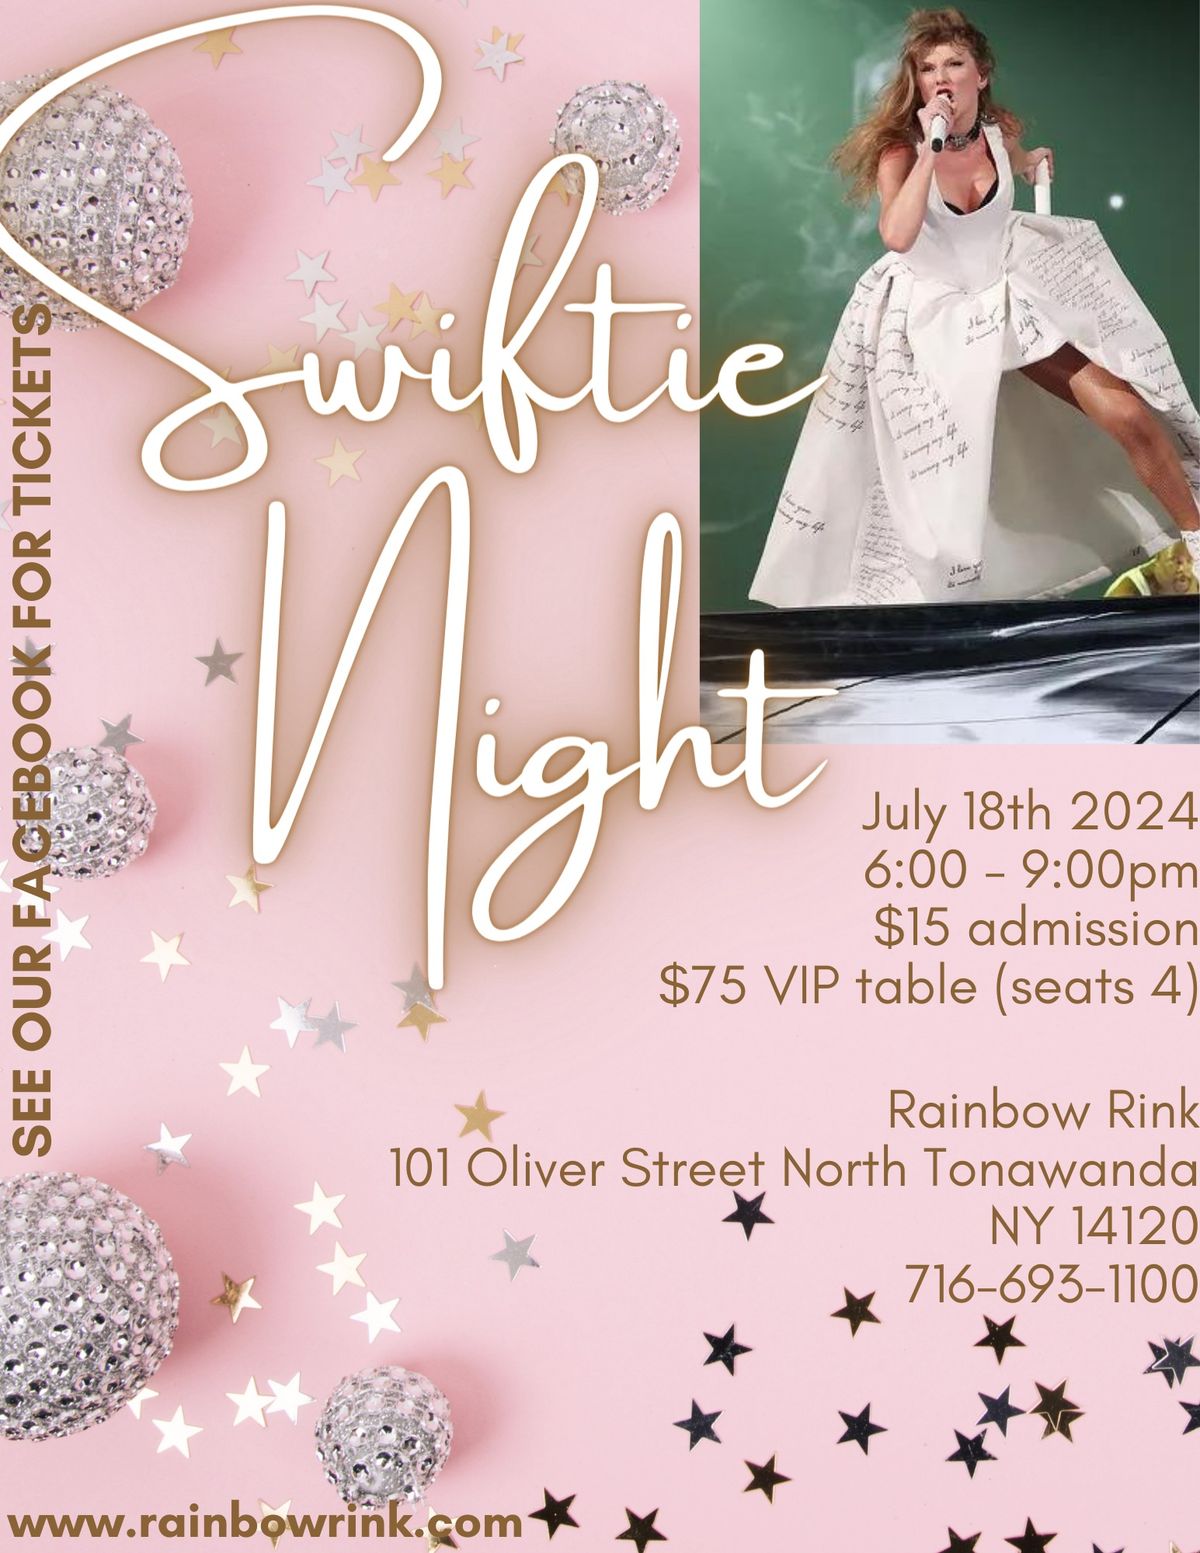 Swiftie Night